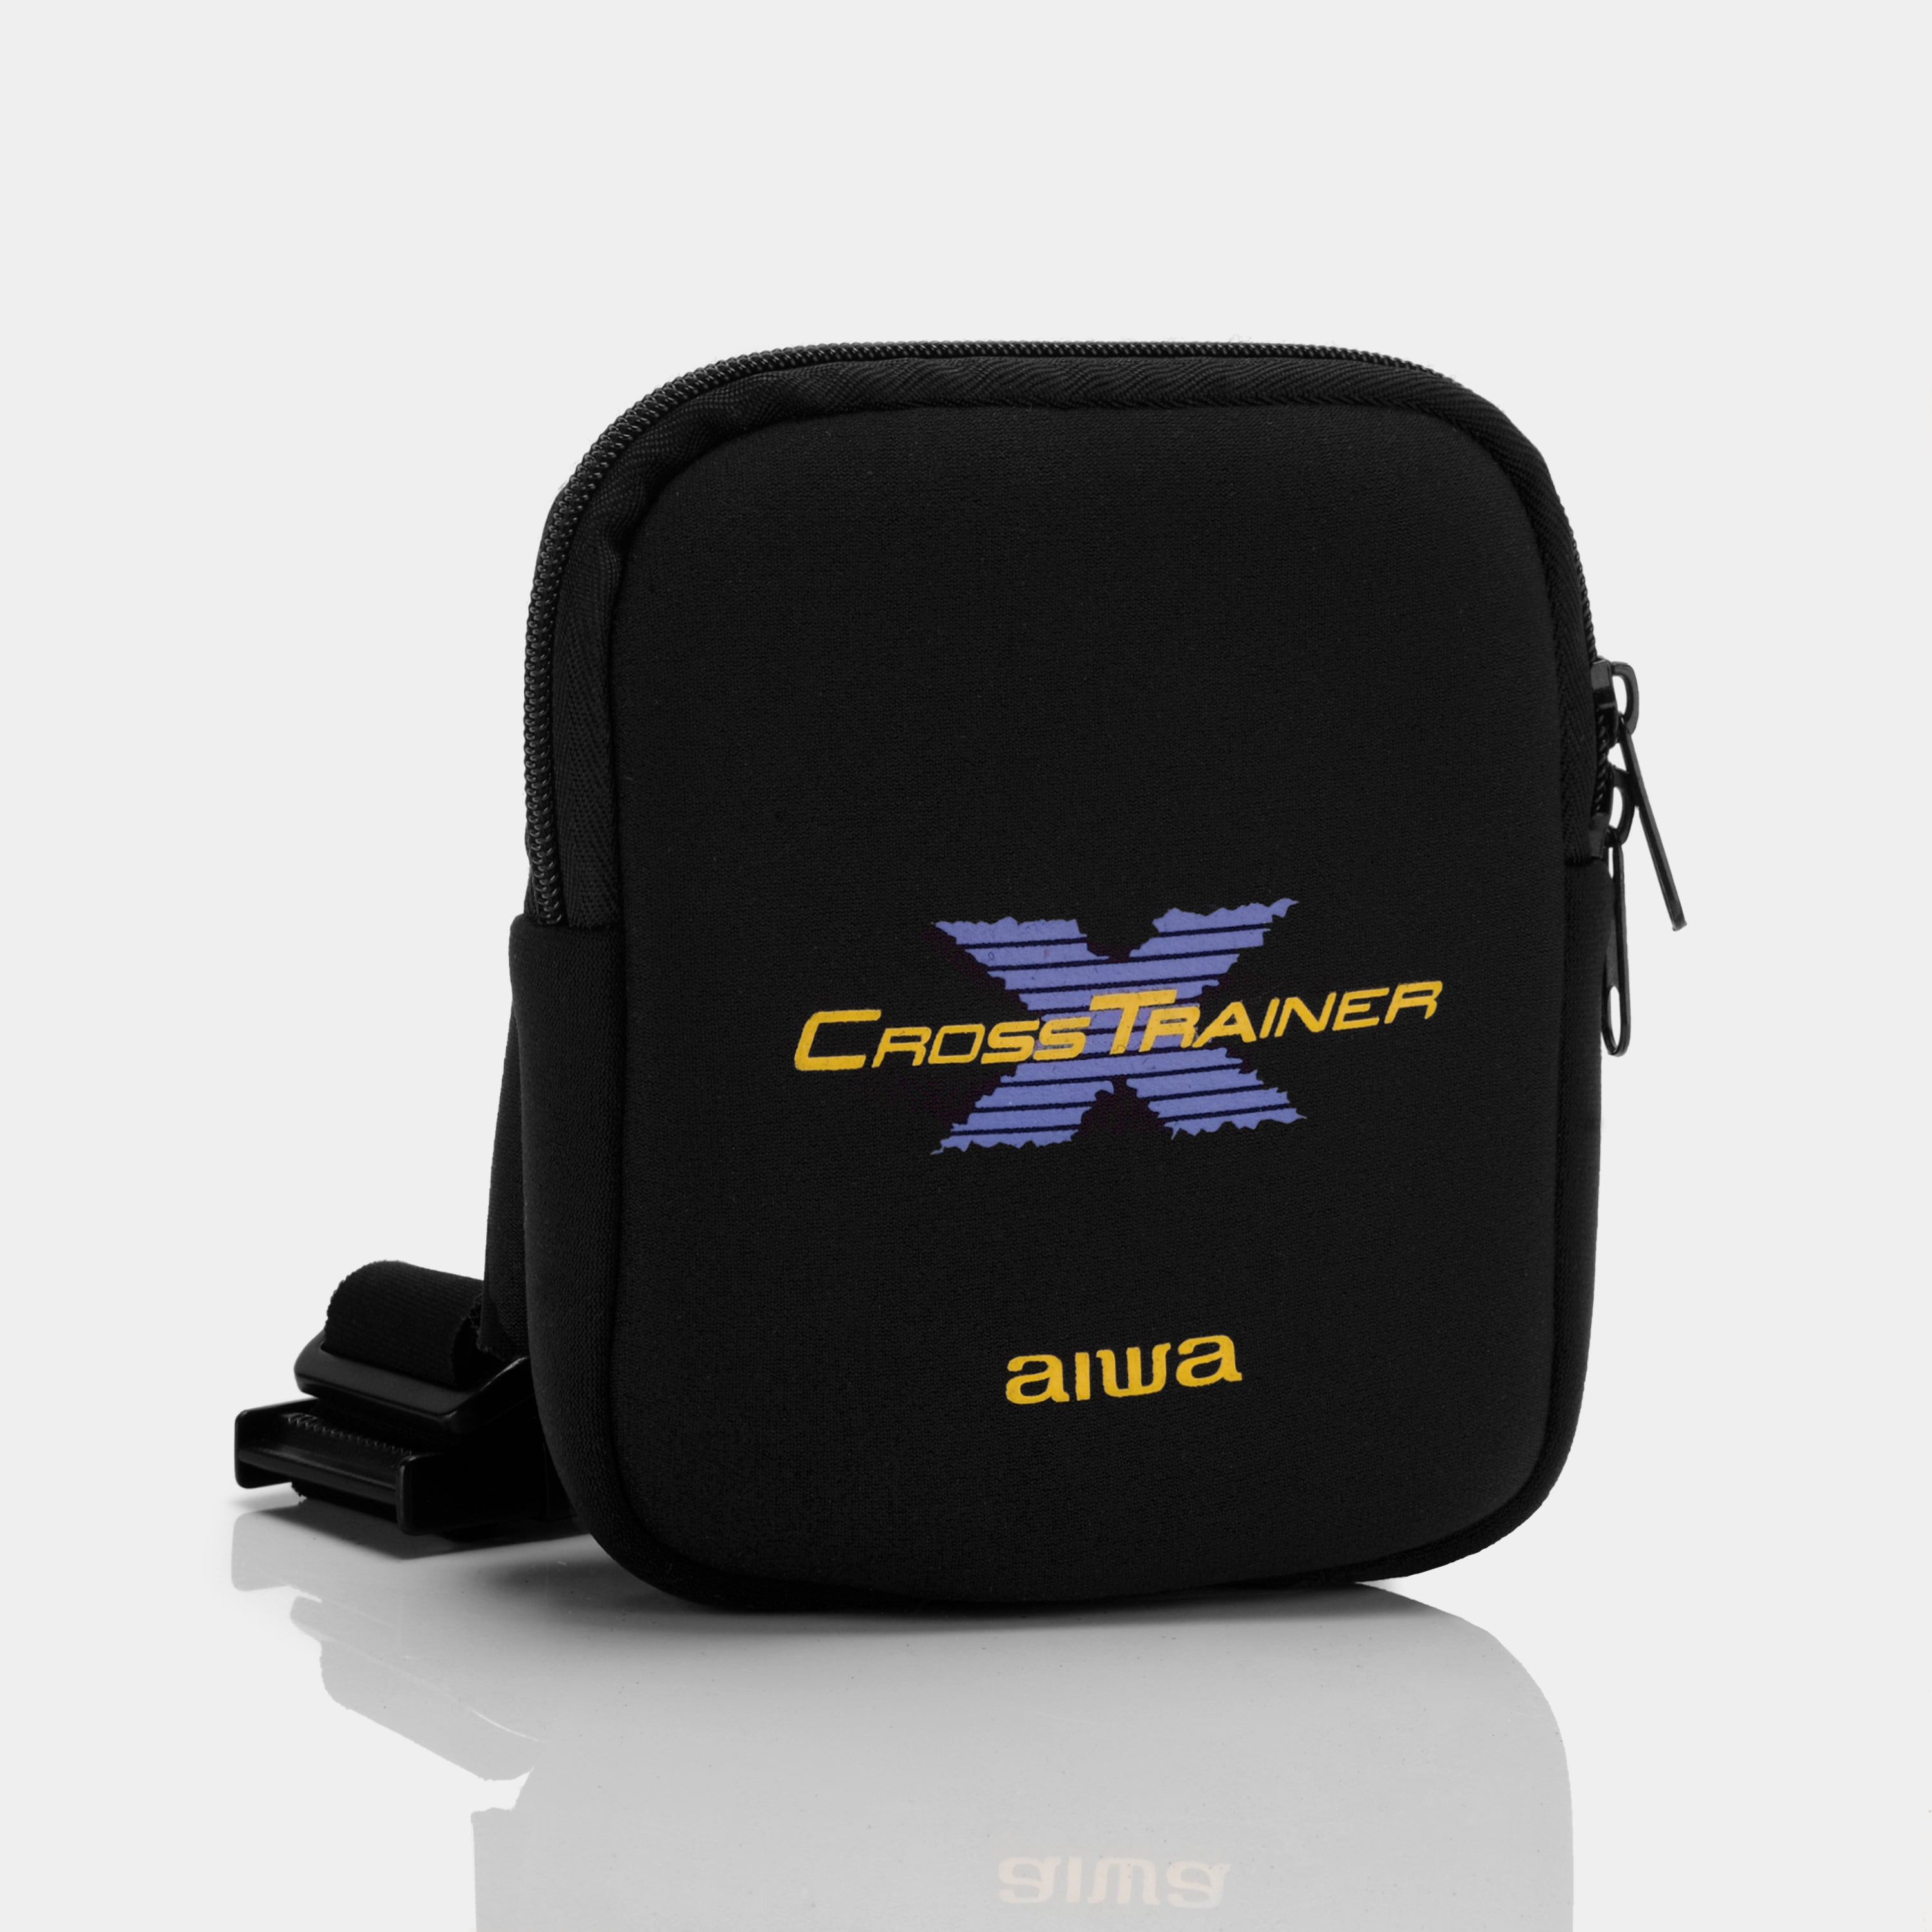 Aiwa Cross Trainer CD Player Bag